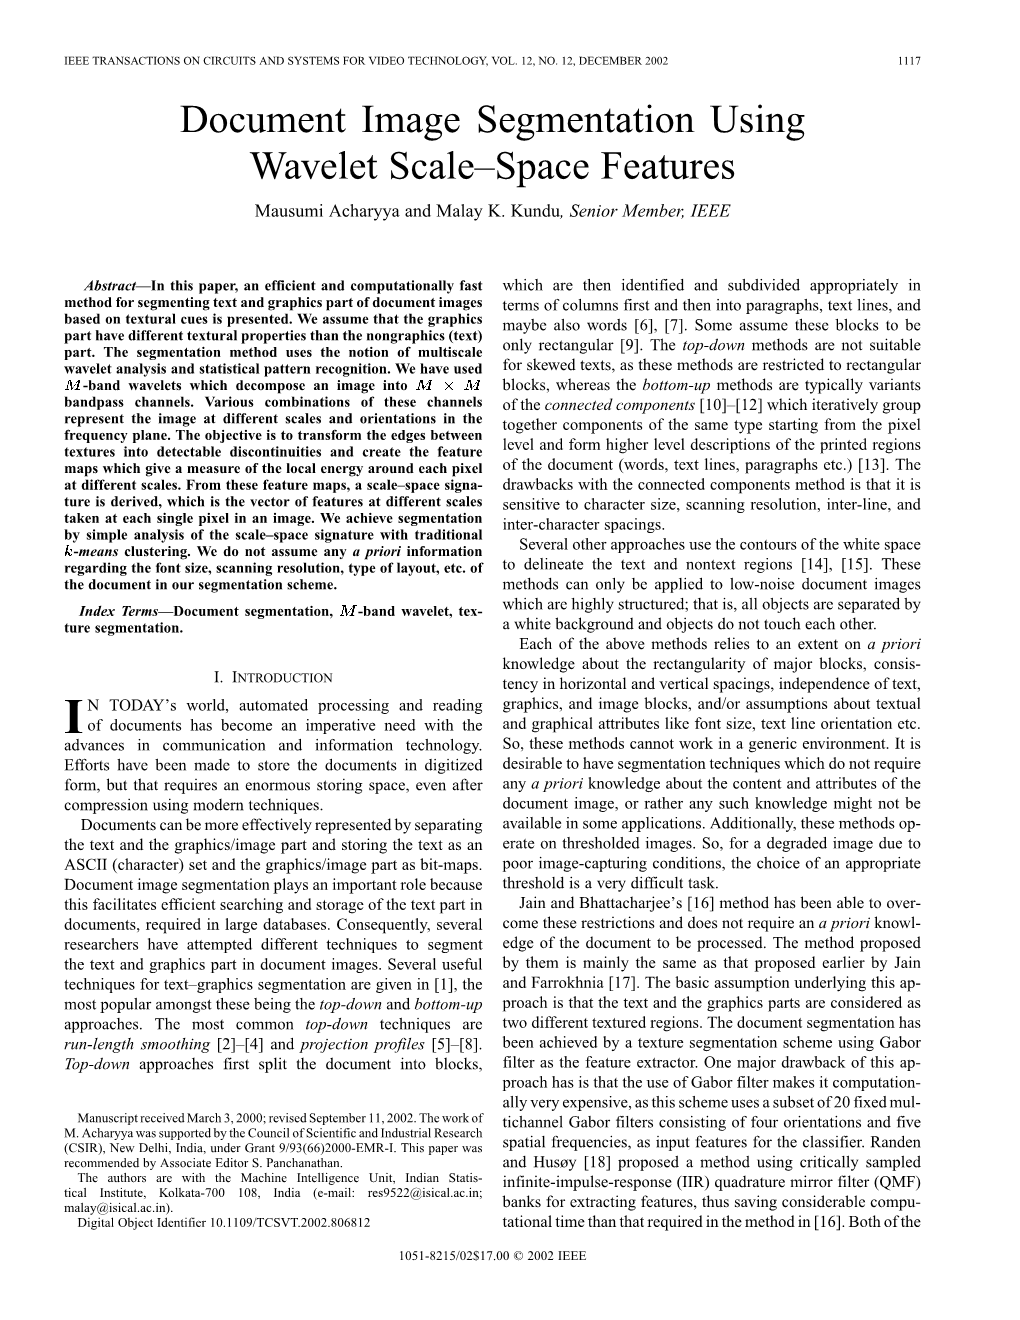 Document Image Segmentation Using Wavelet Scale–Space Features Mausumi Acharyya and Malay K